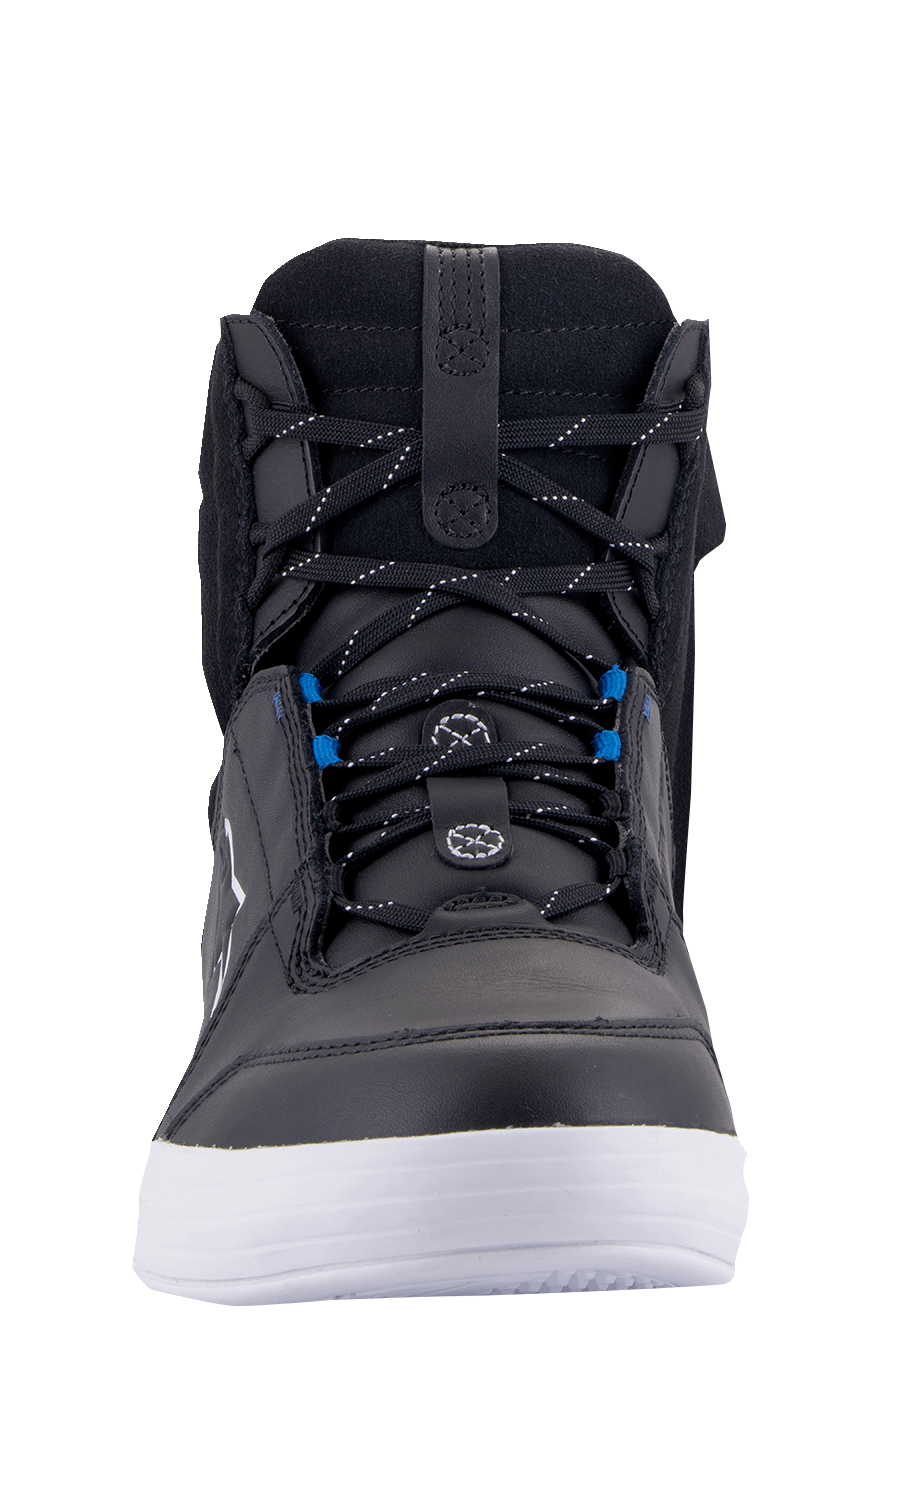 ALPINESTARS Chrome Shoes - Waterproof - Black/White - US 10.5 2543123-157-105 - Electrek Moto